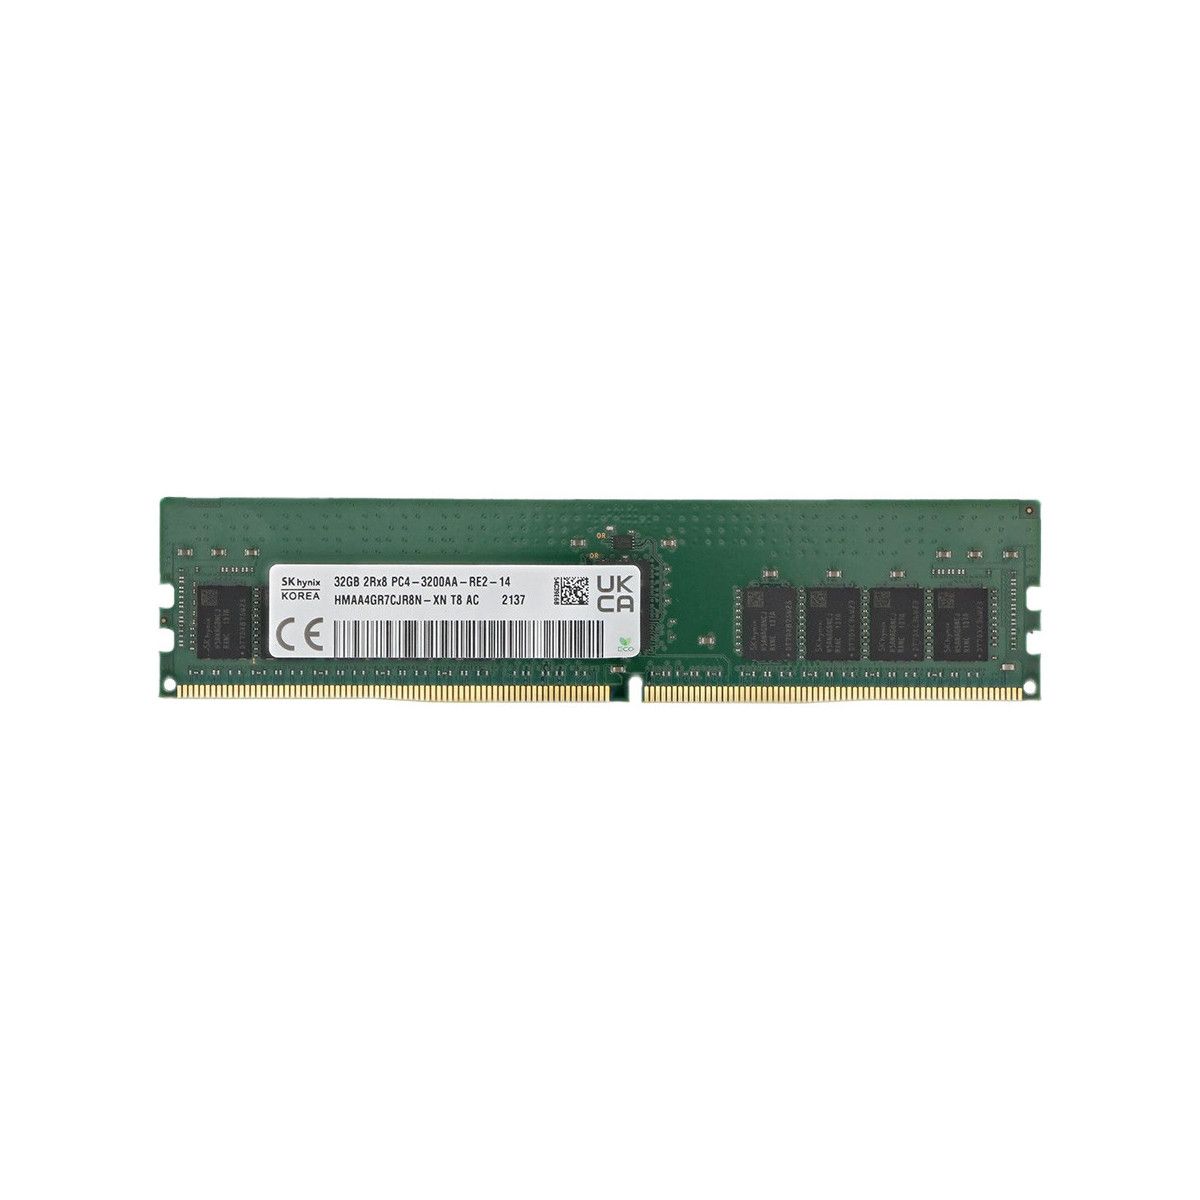 P11445‐1A1-MS - Memstar 1x 32GB DDR4-3200 RDIMM PC4-25600R - Mem-star Compatible OEM Memory 1 - Memstar 